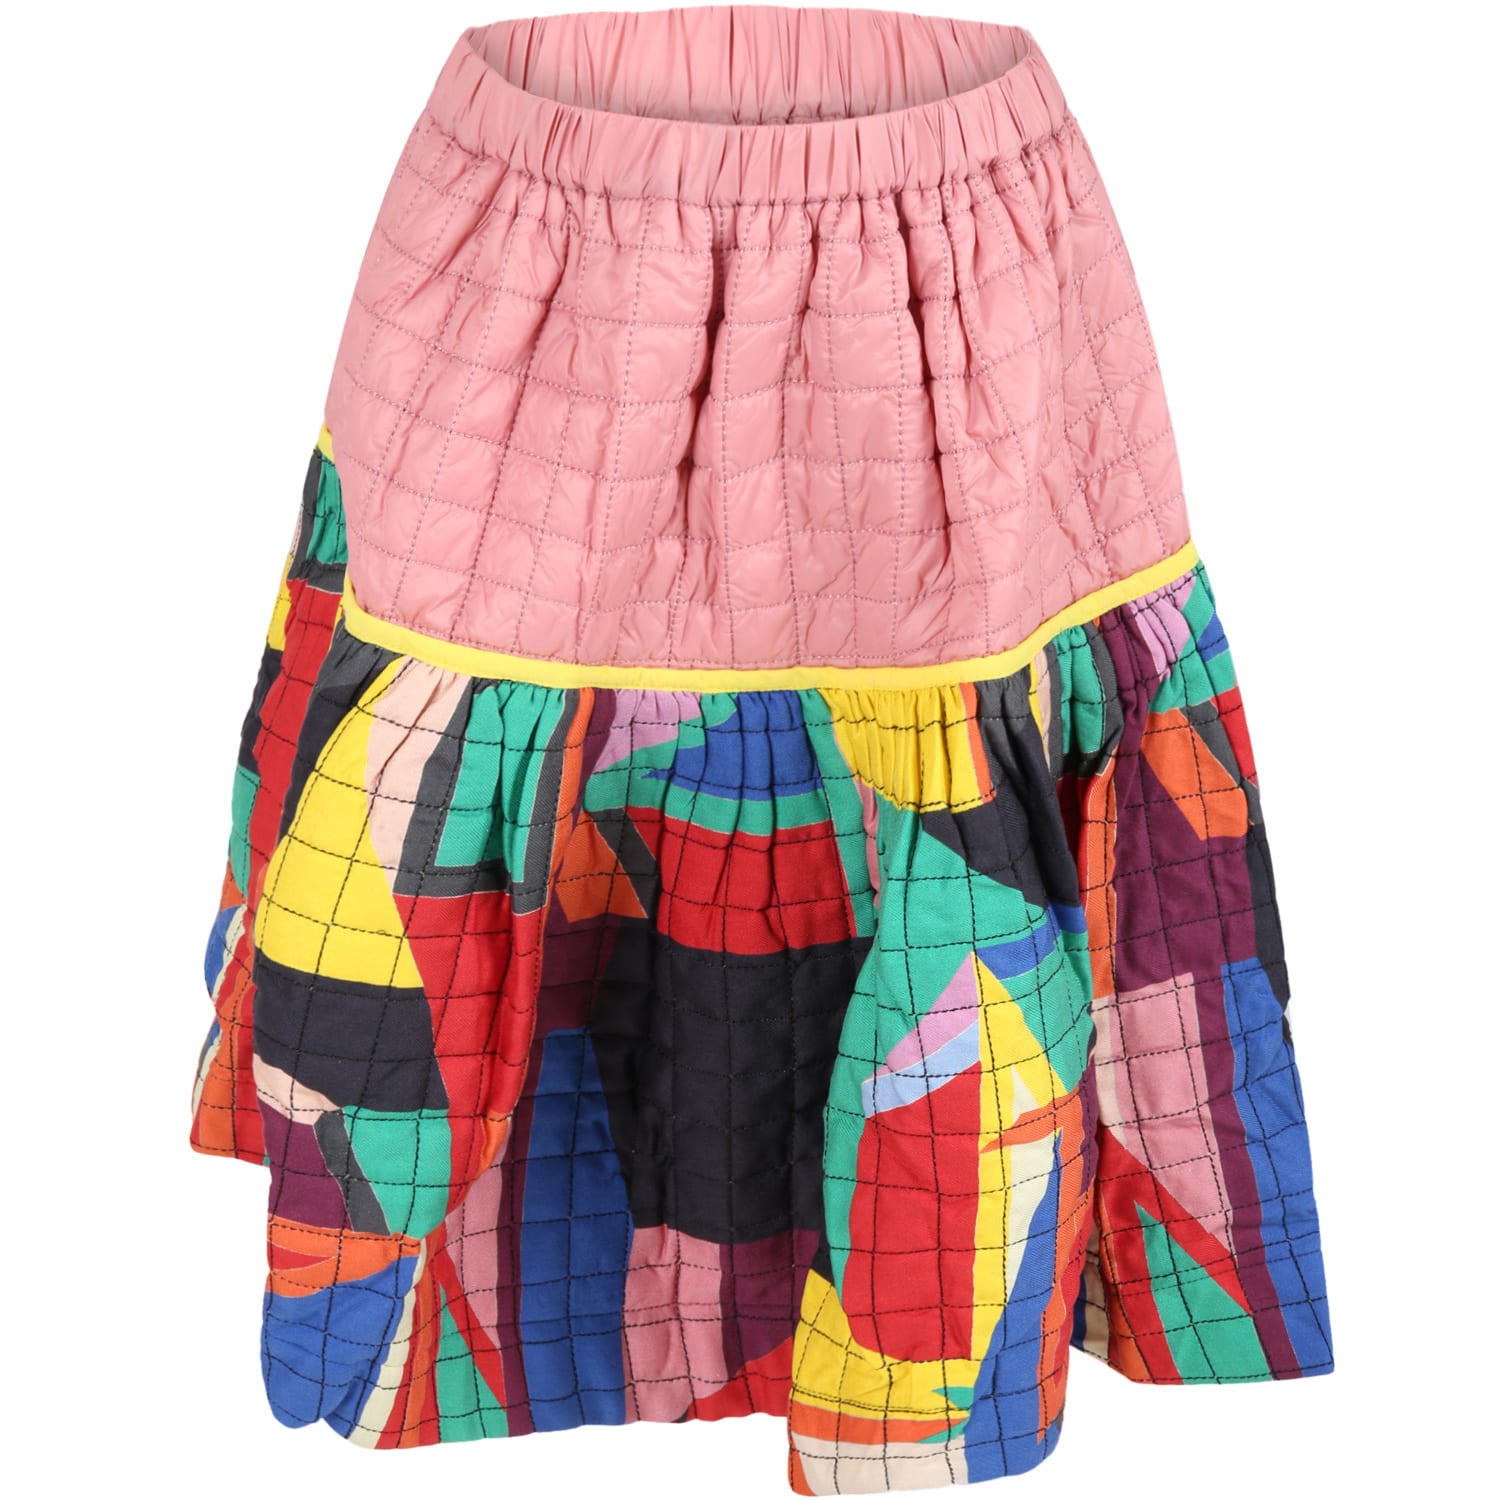 Tia Cibani Kids' Multicolor Skirt For Girl